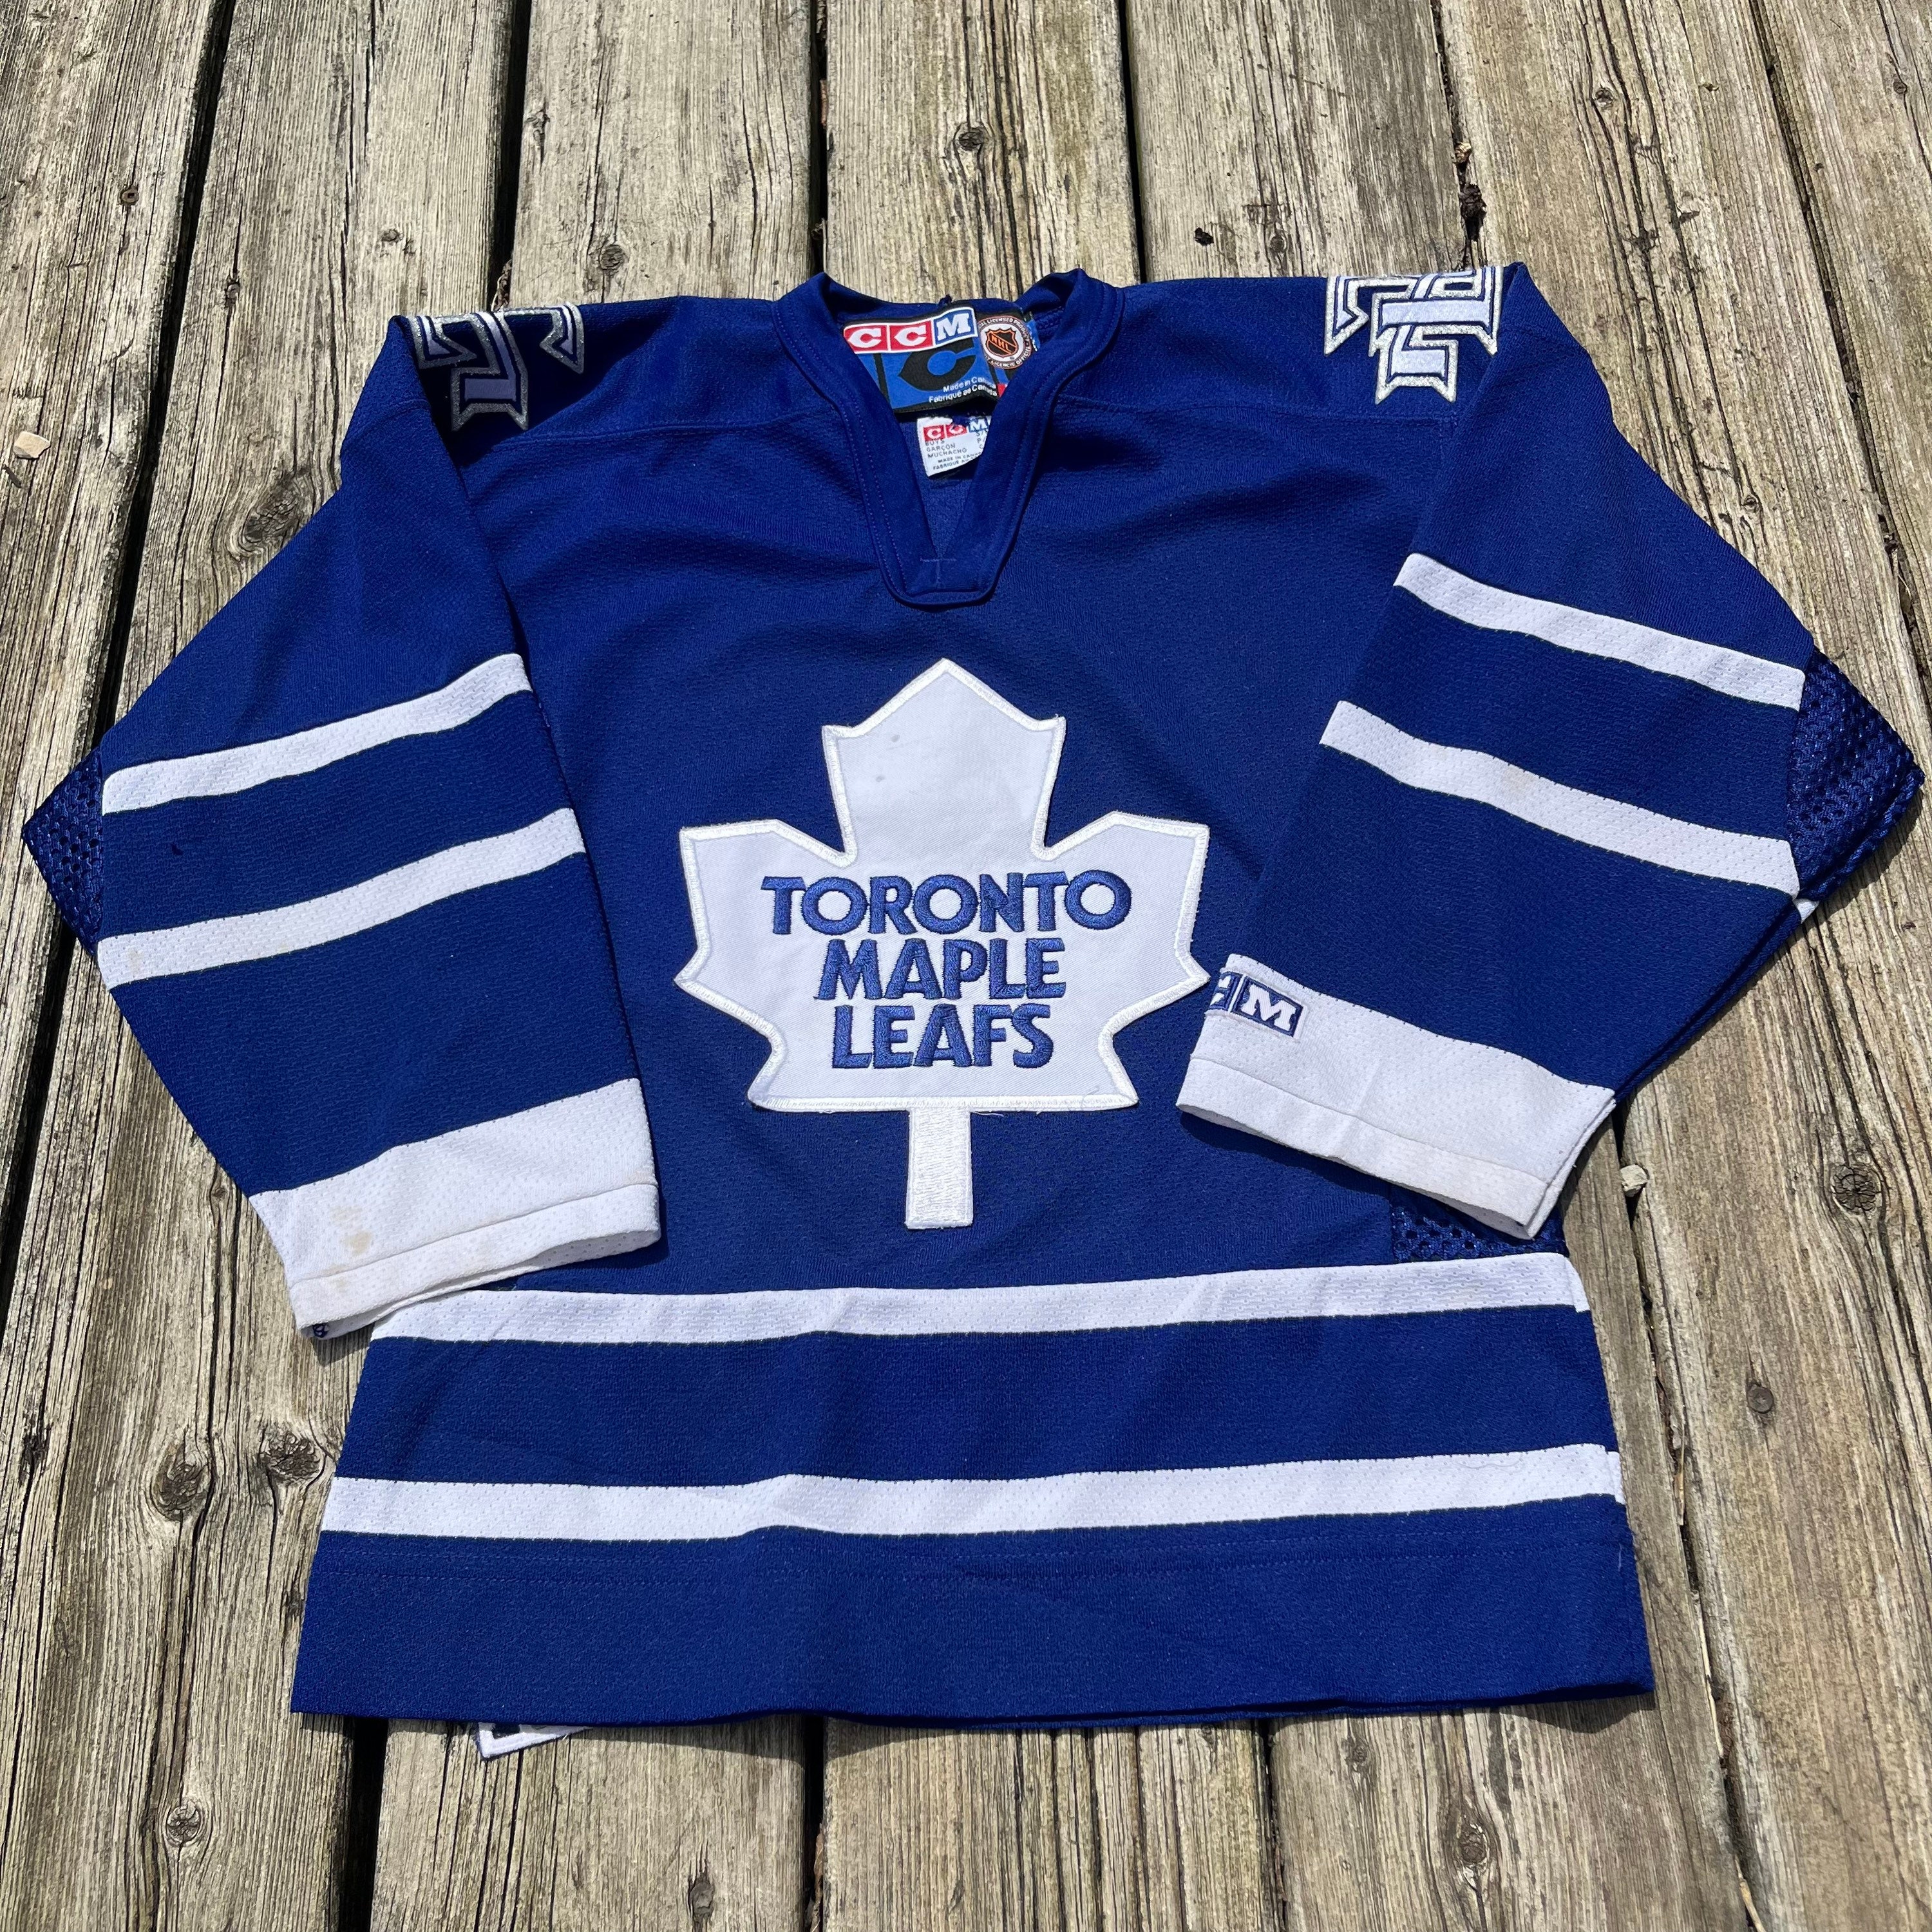 Personalized NHL Toronto Maple Leafs native American jersey shirt